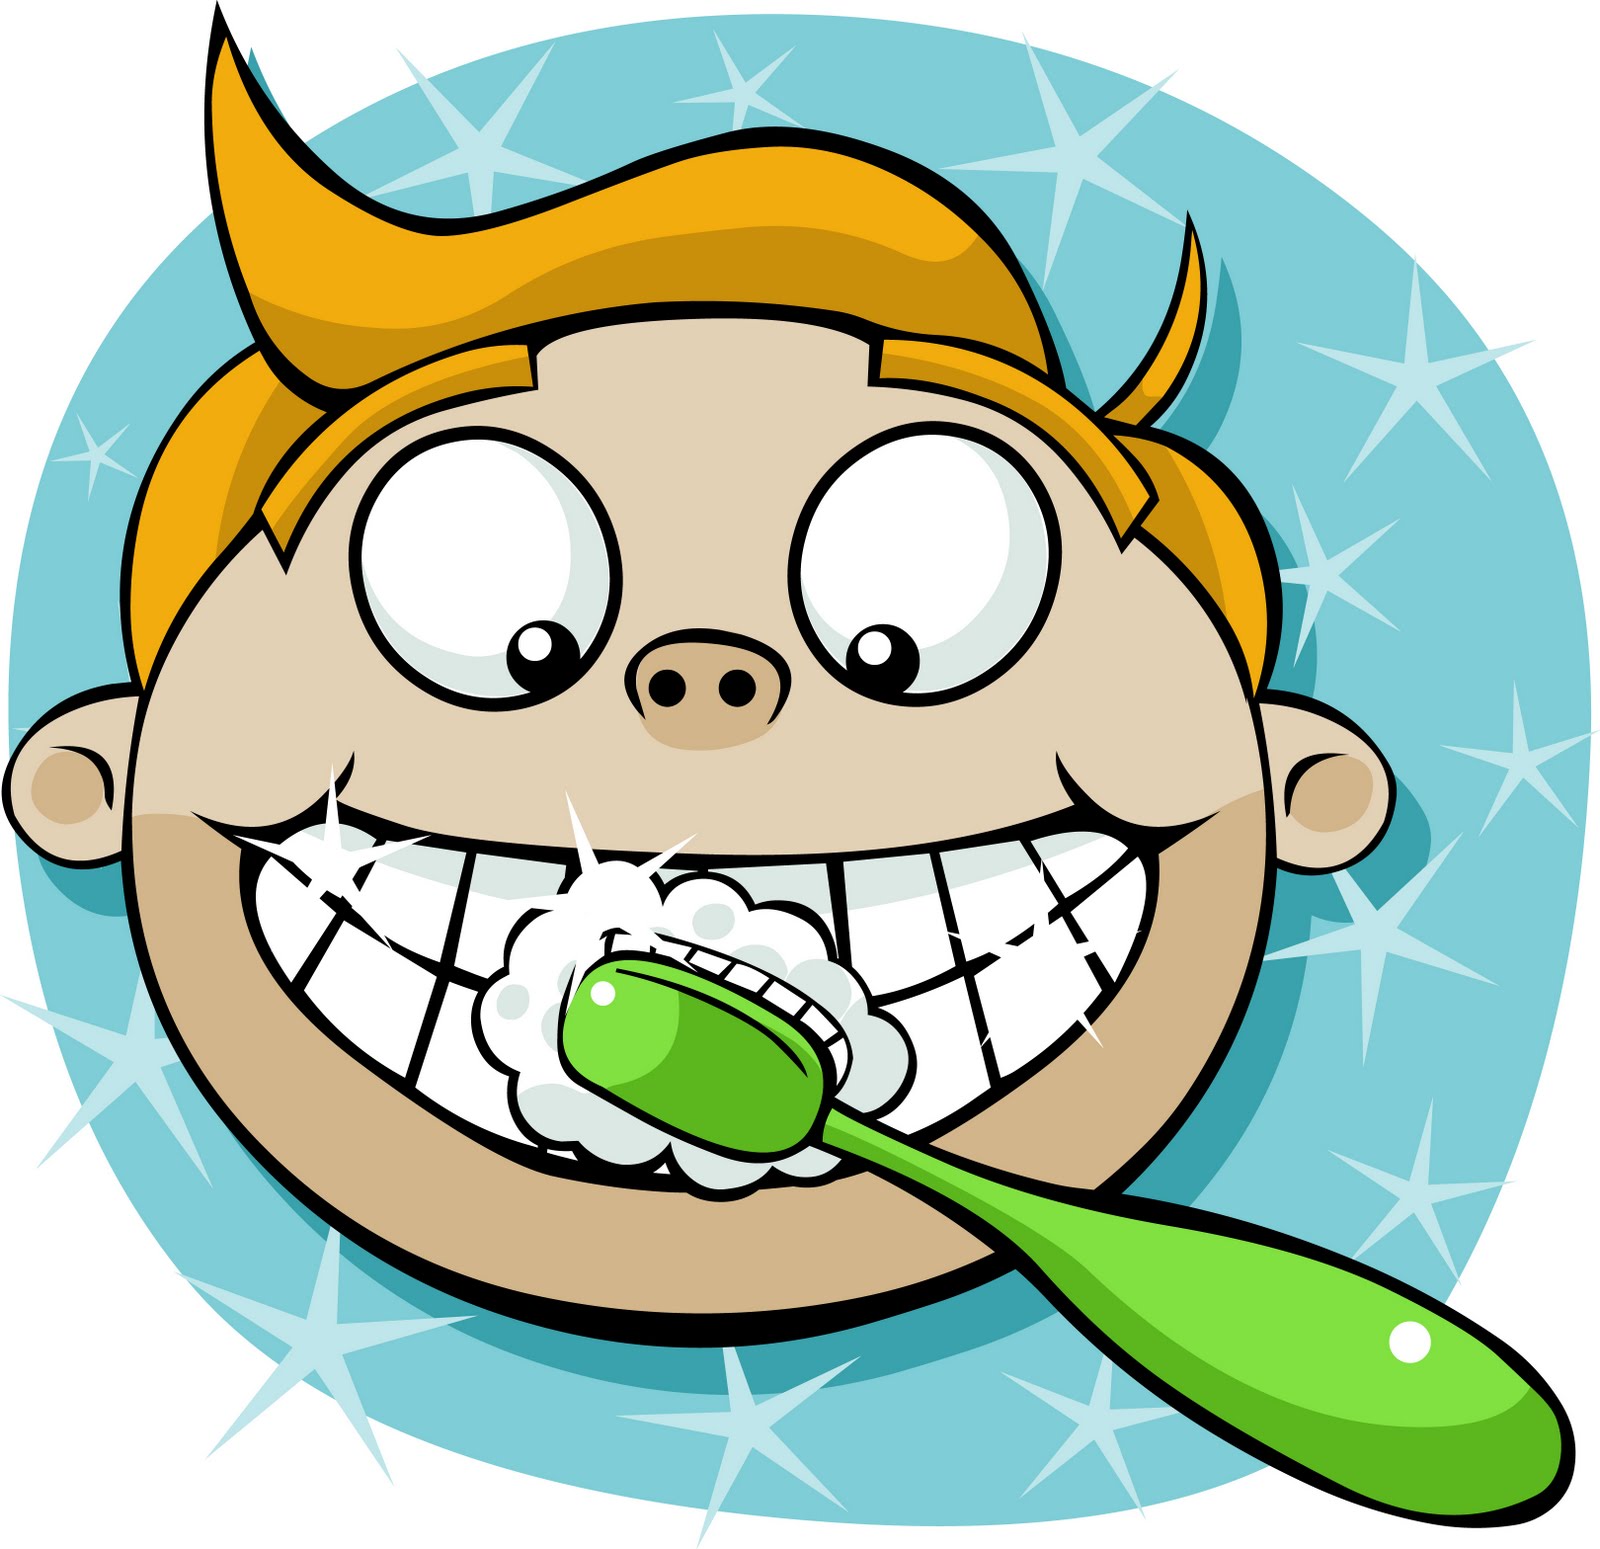 Brush Teeth Brush Your Teeth Hd Image Clipart